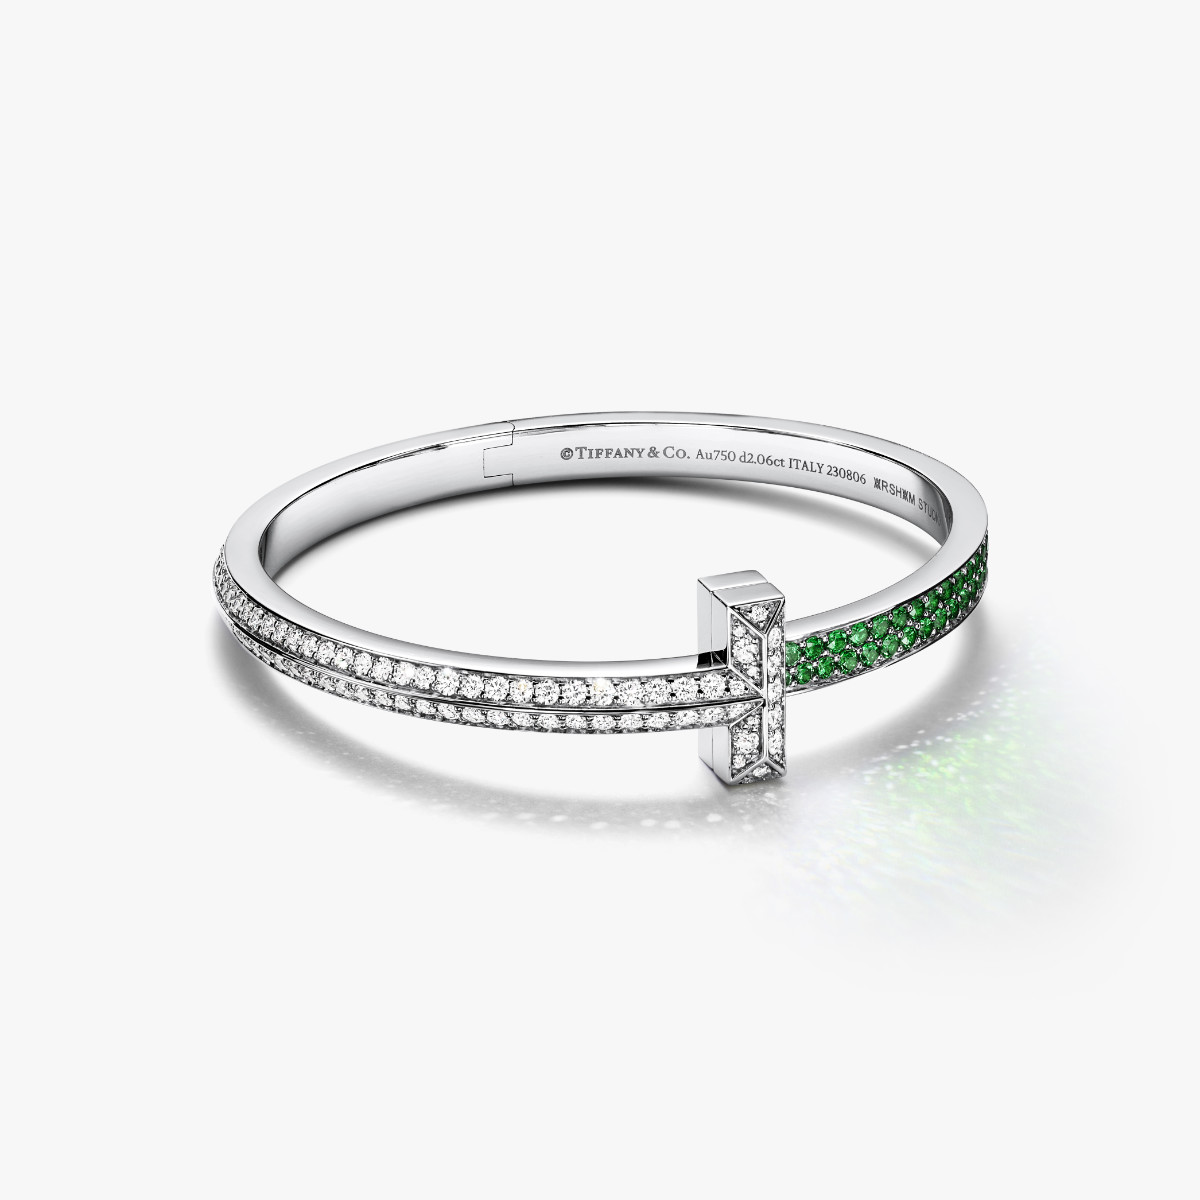 Tiffany & Co. X Daniel Arsham: A Limited-edition T1 Bracelet And Bust